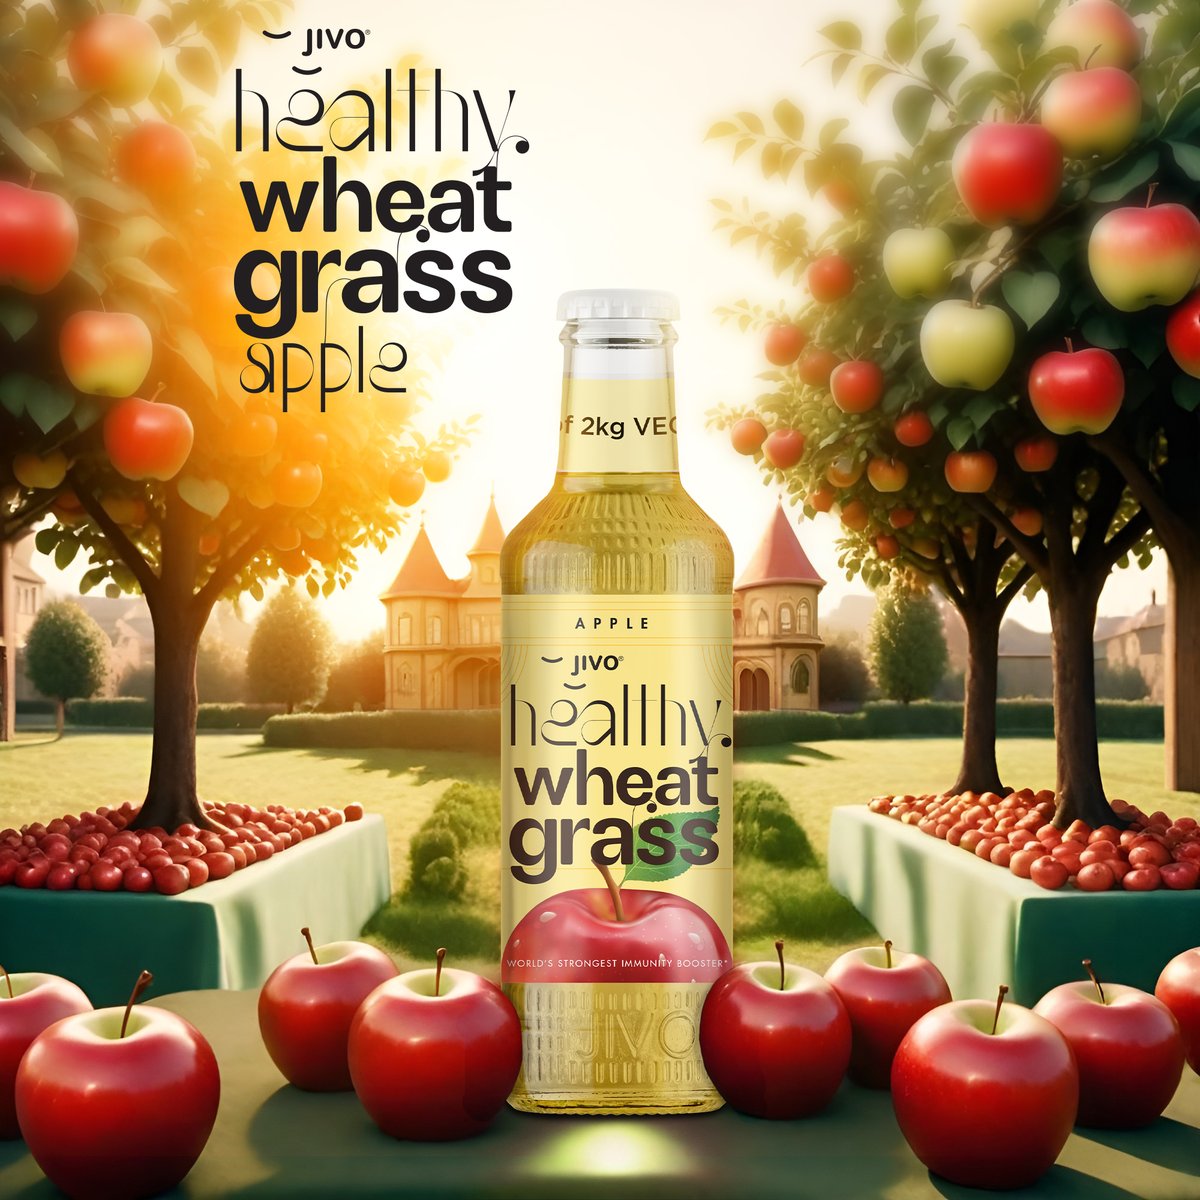 An apple a day? Make it Jivo Wheatgrass! 🍏

#Jivo #Wheatgrass #AbThandaNahiHealthyThanda #JivoAppleWheatgrass #HealthyHabit #NaturalHealth #WheatgrassWellness #DrinkGreen #HealthyLiving